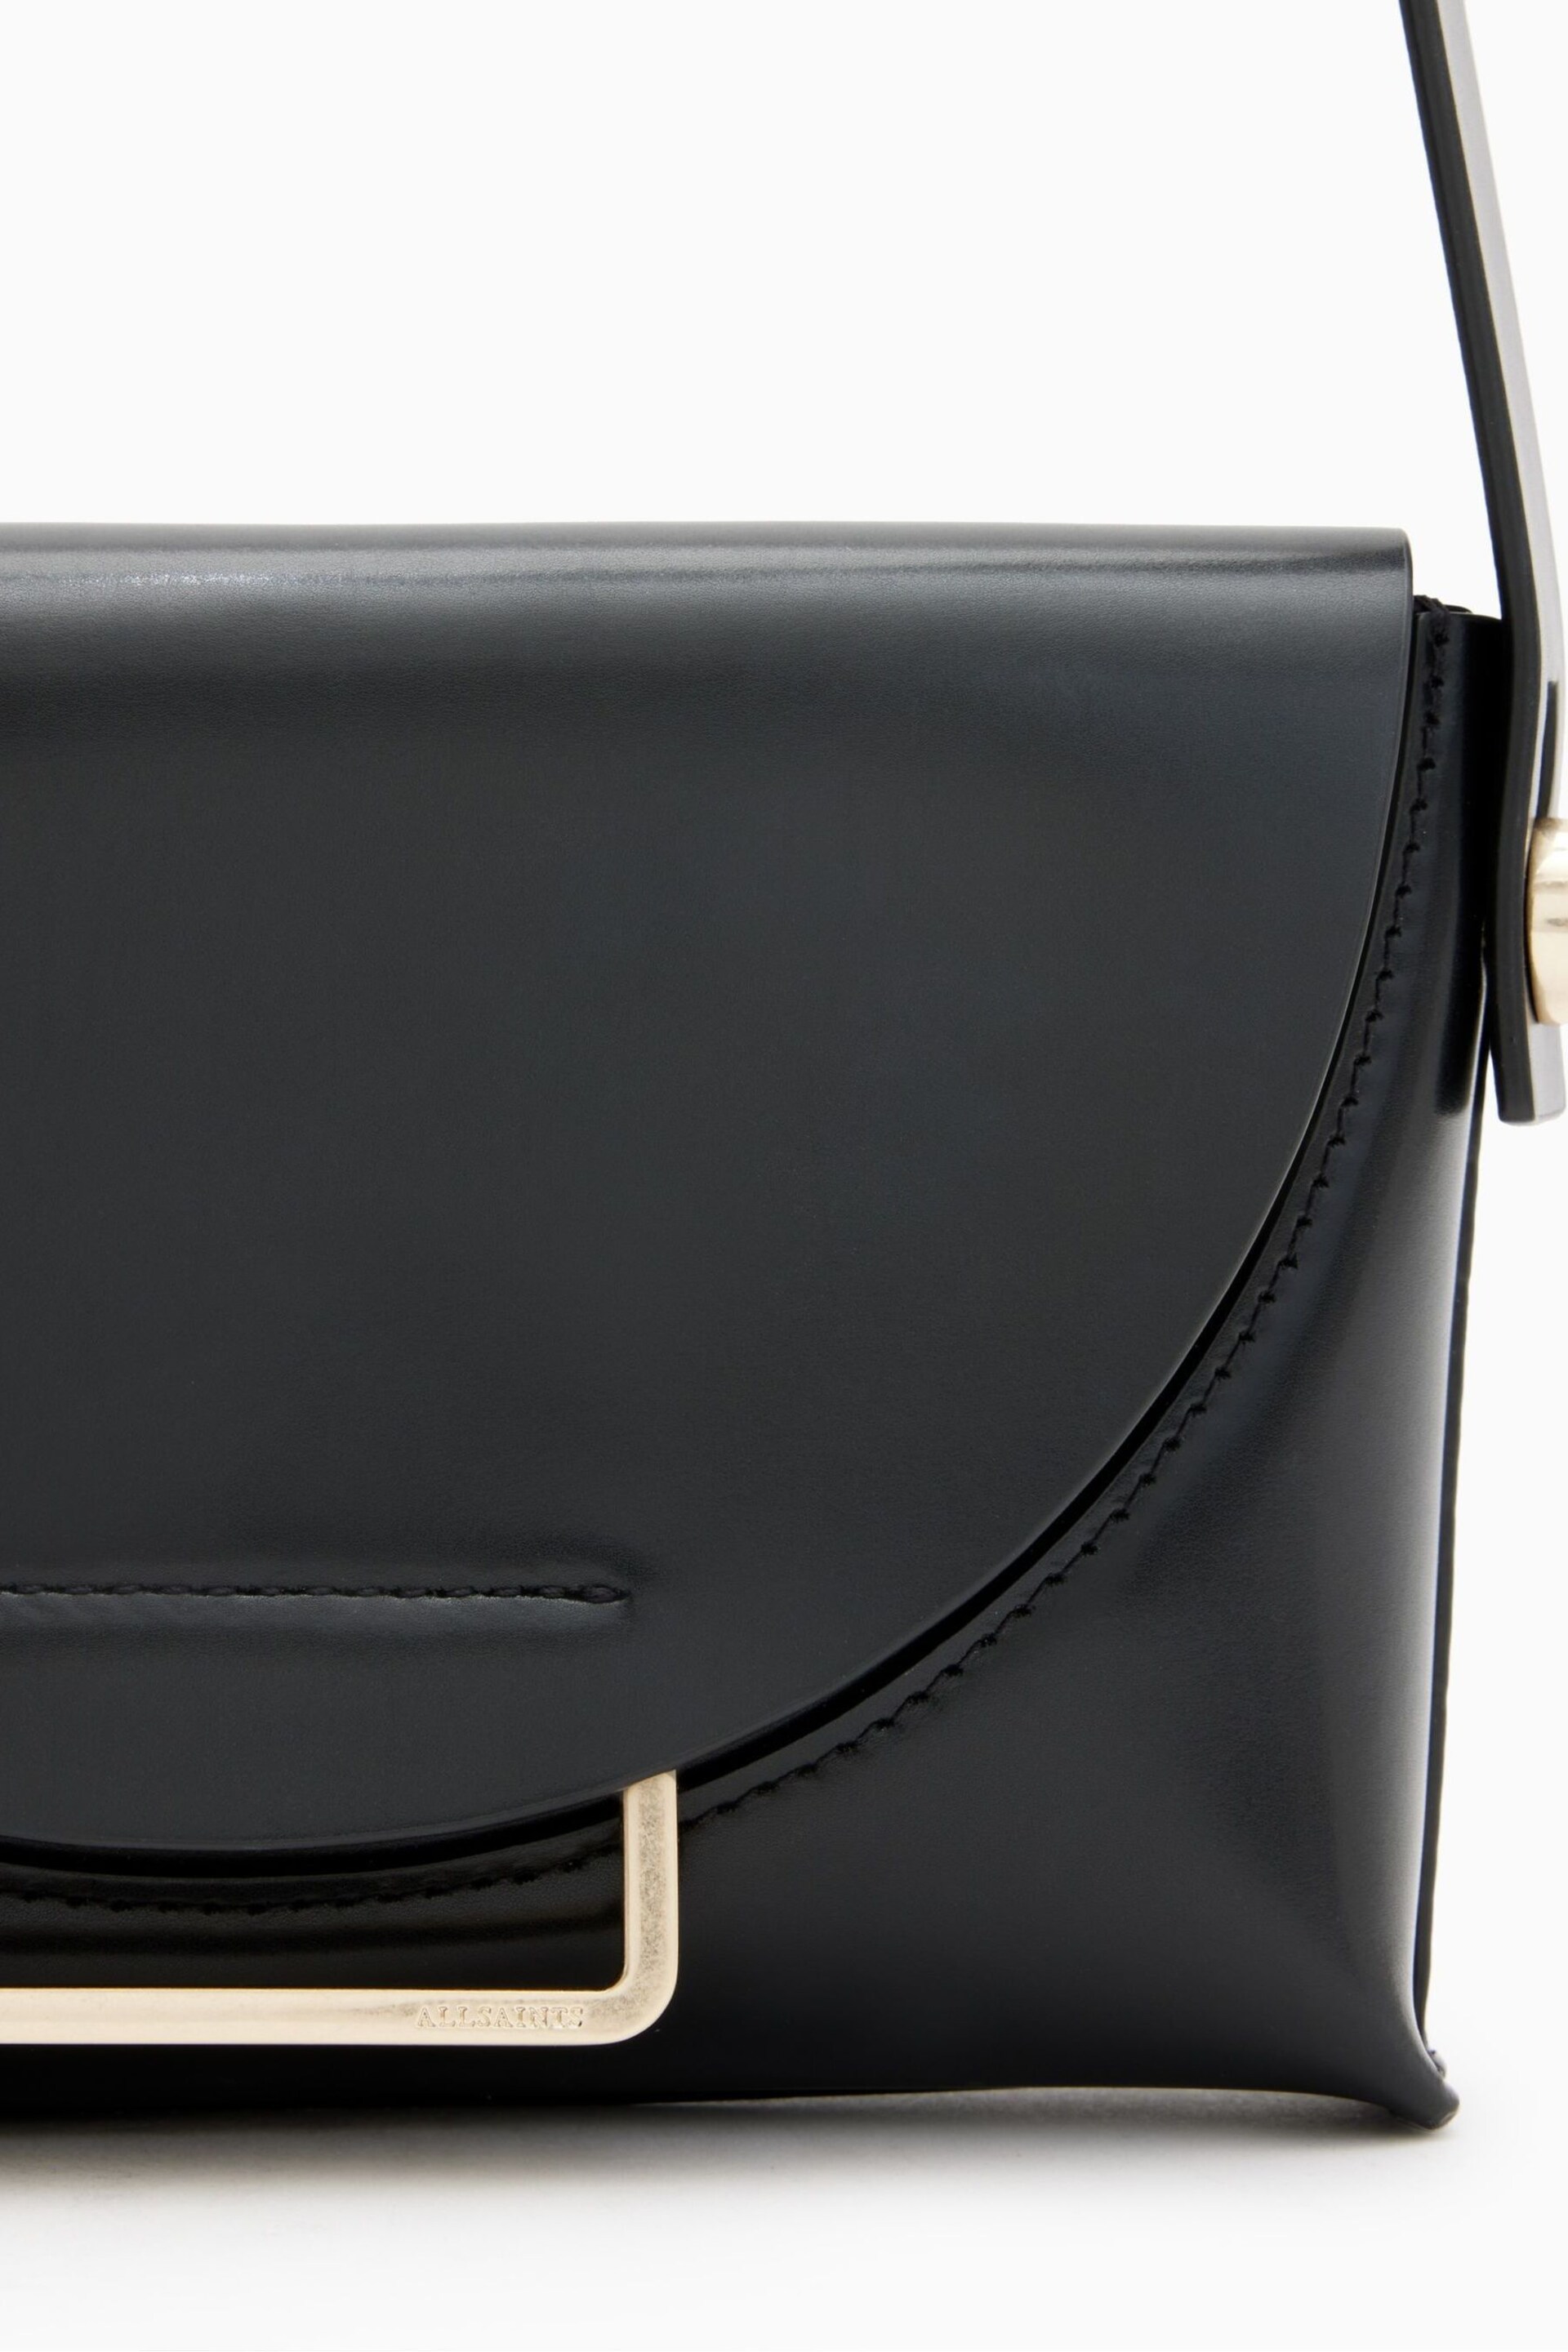 AllSaints Black Cross-Body Francine Bag - Image 7 of 8